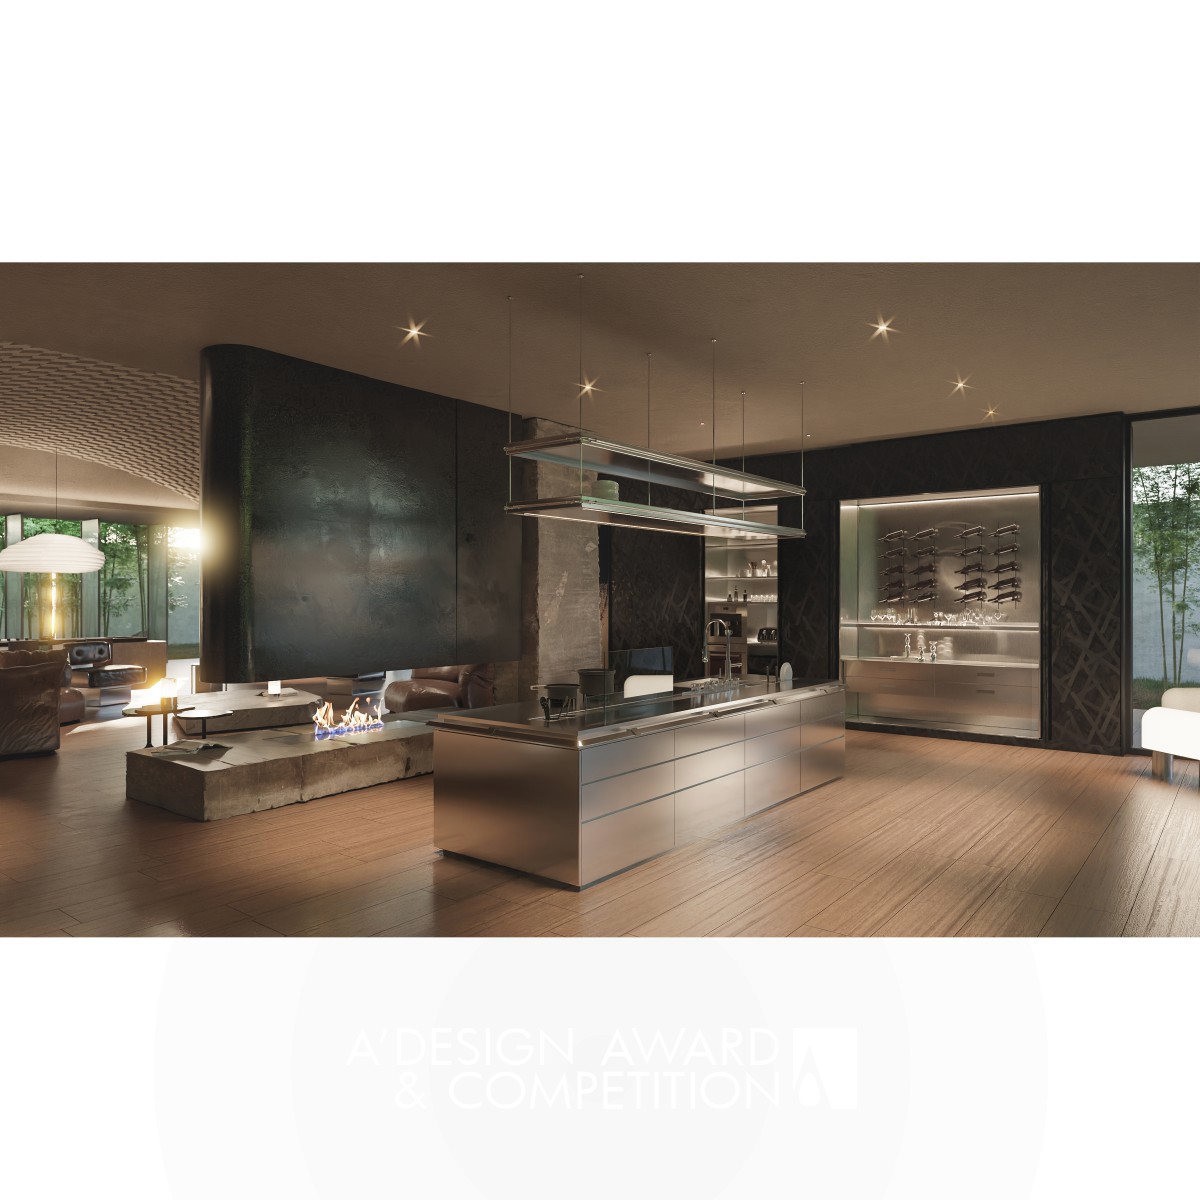 HD Mengyin Black Golden Kitchen Cabinet by Yuanhua He, Yunchang Lu and Lini Lin Golden Kitchen Furniture, Equipment and Fixtures Design Award Winner 2023 